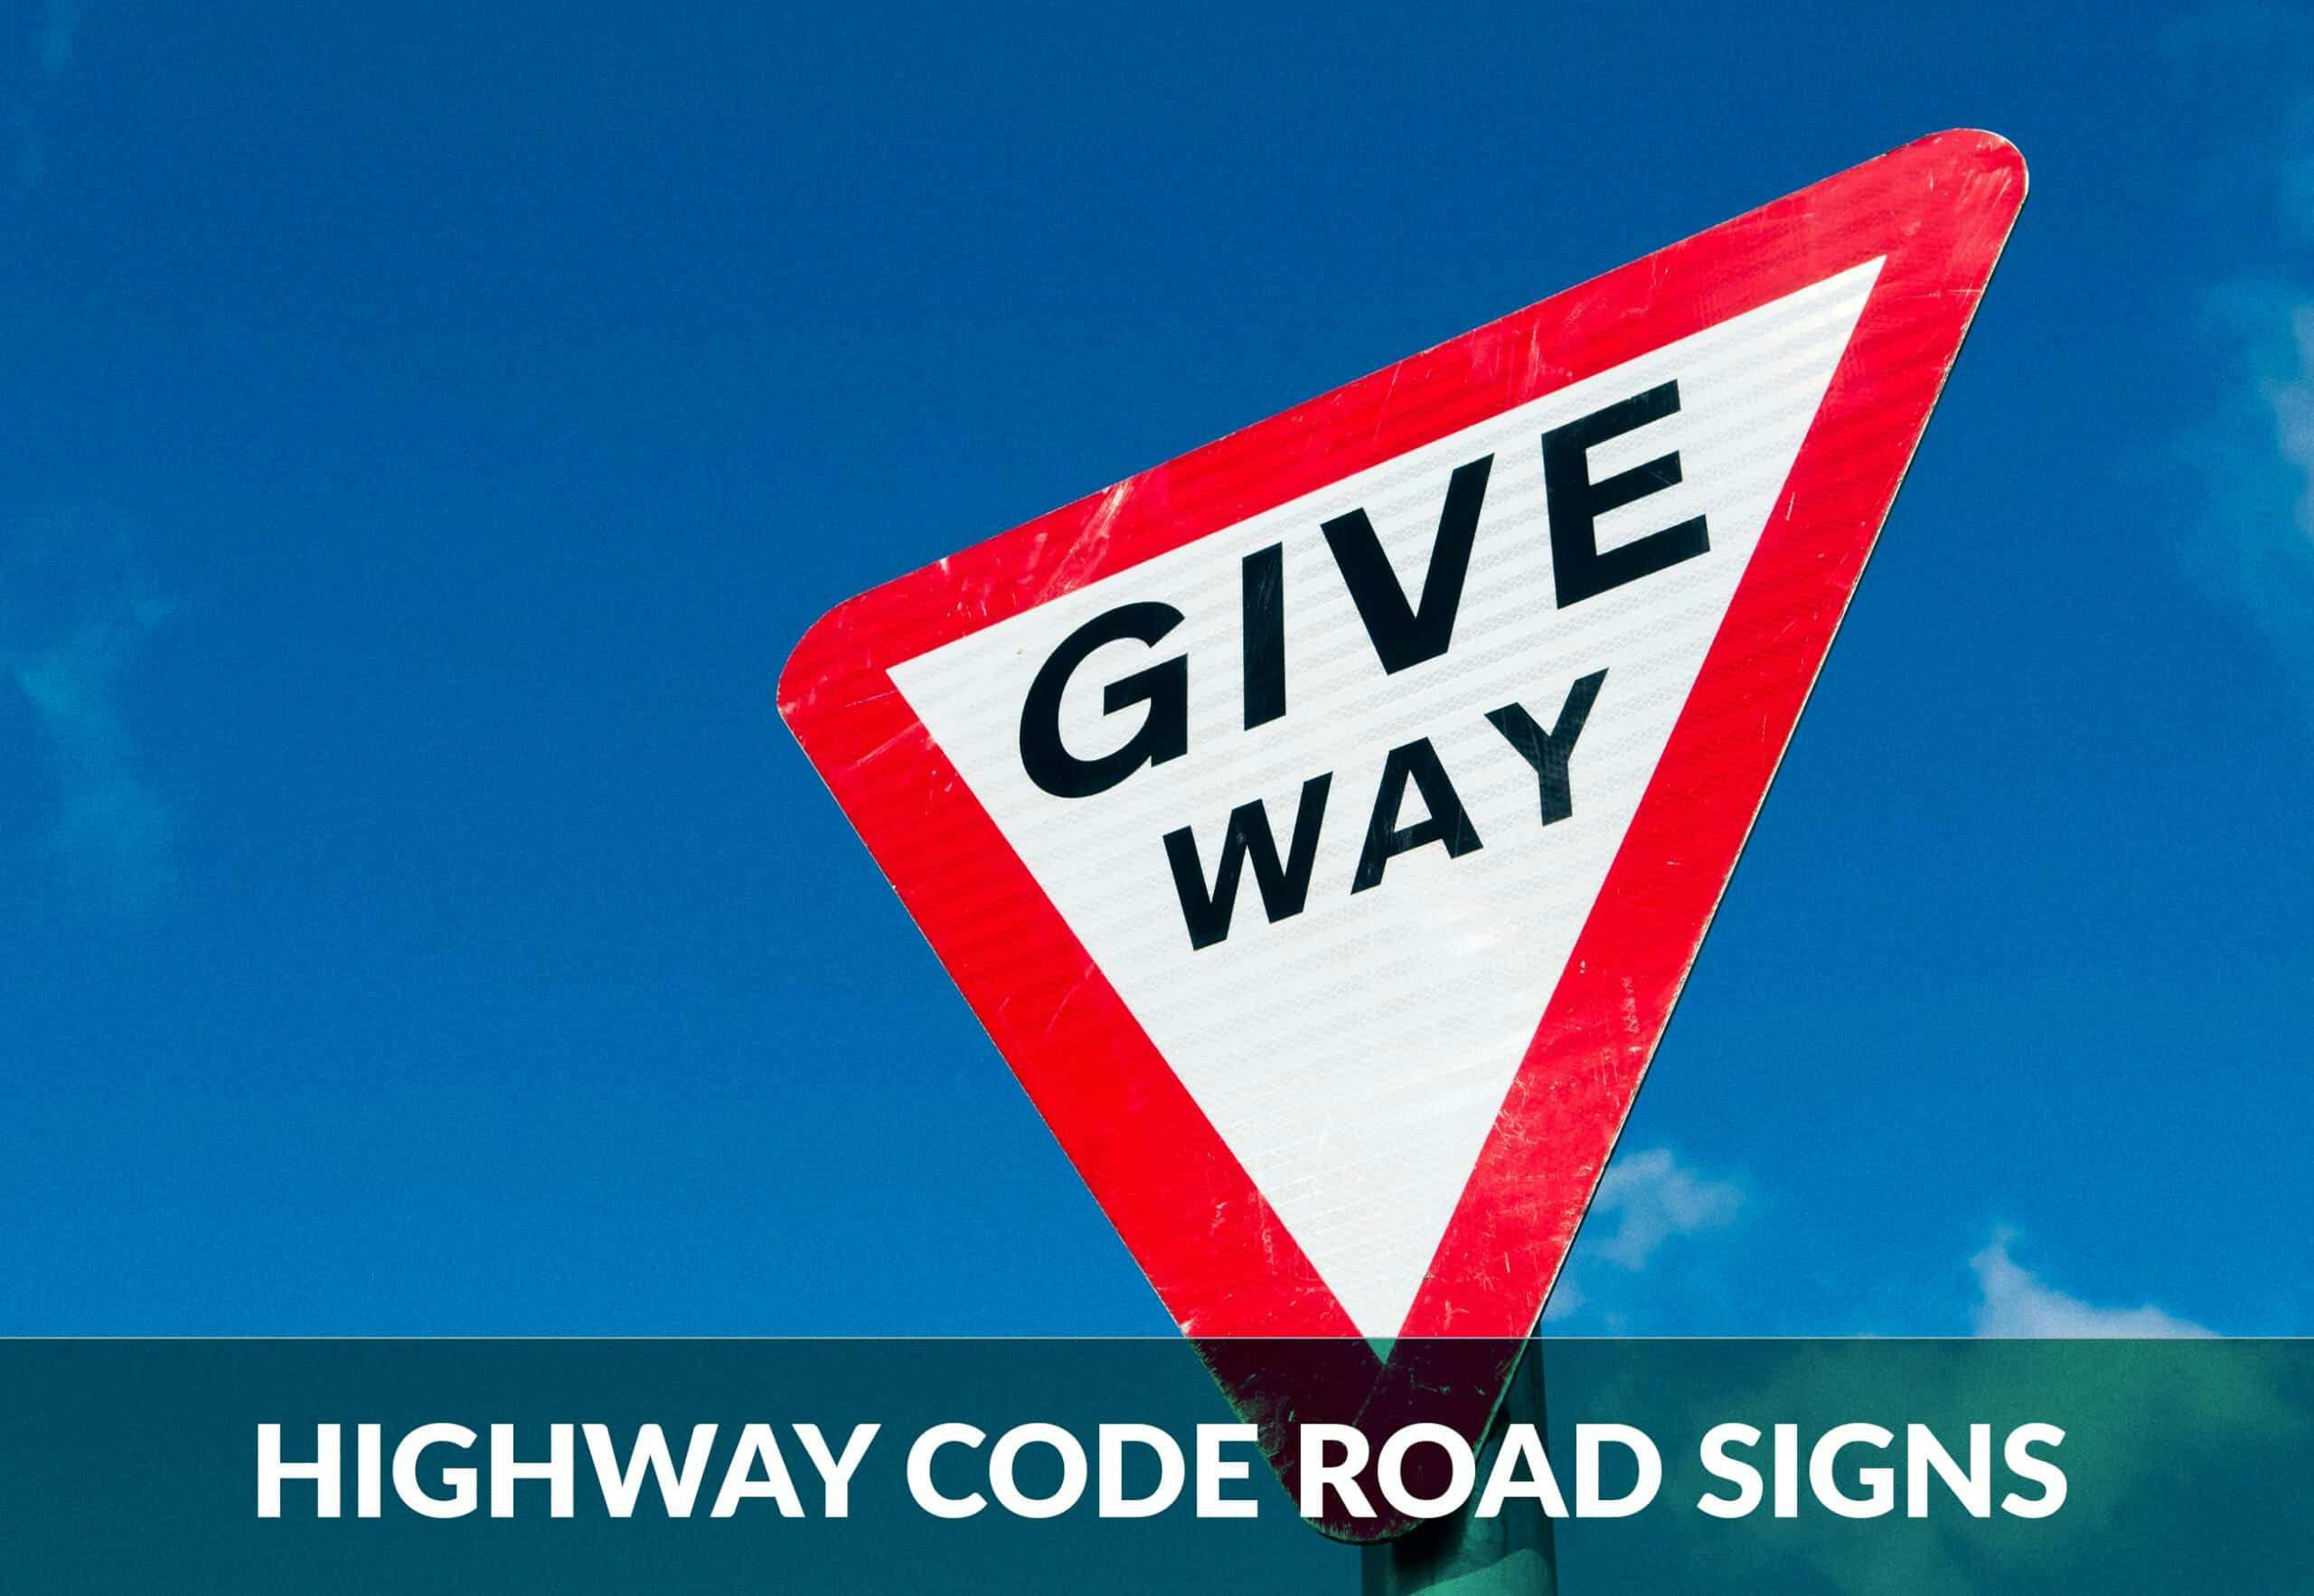 Highway code road signs